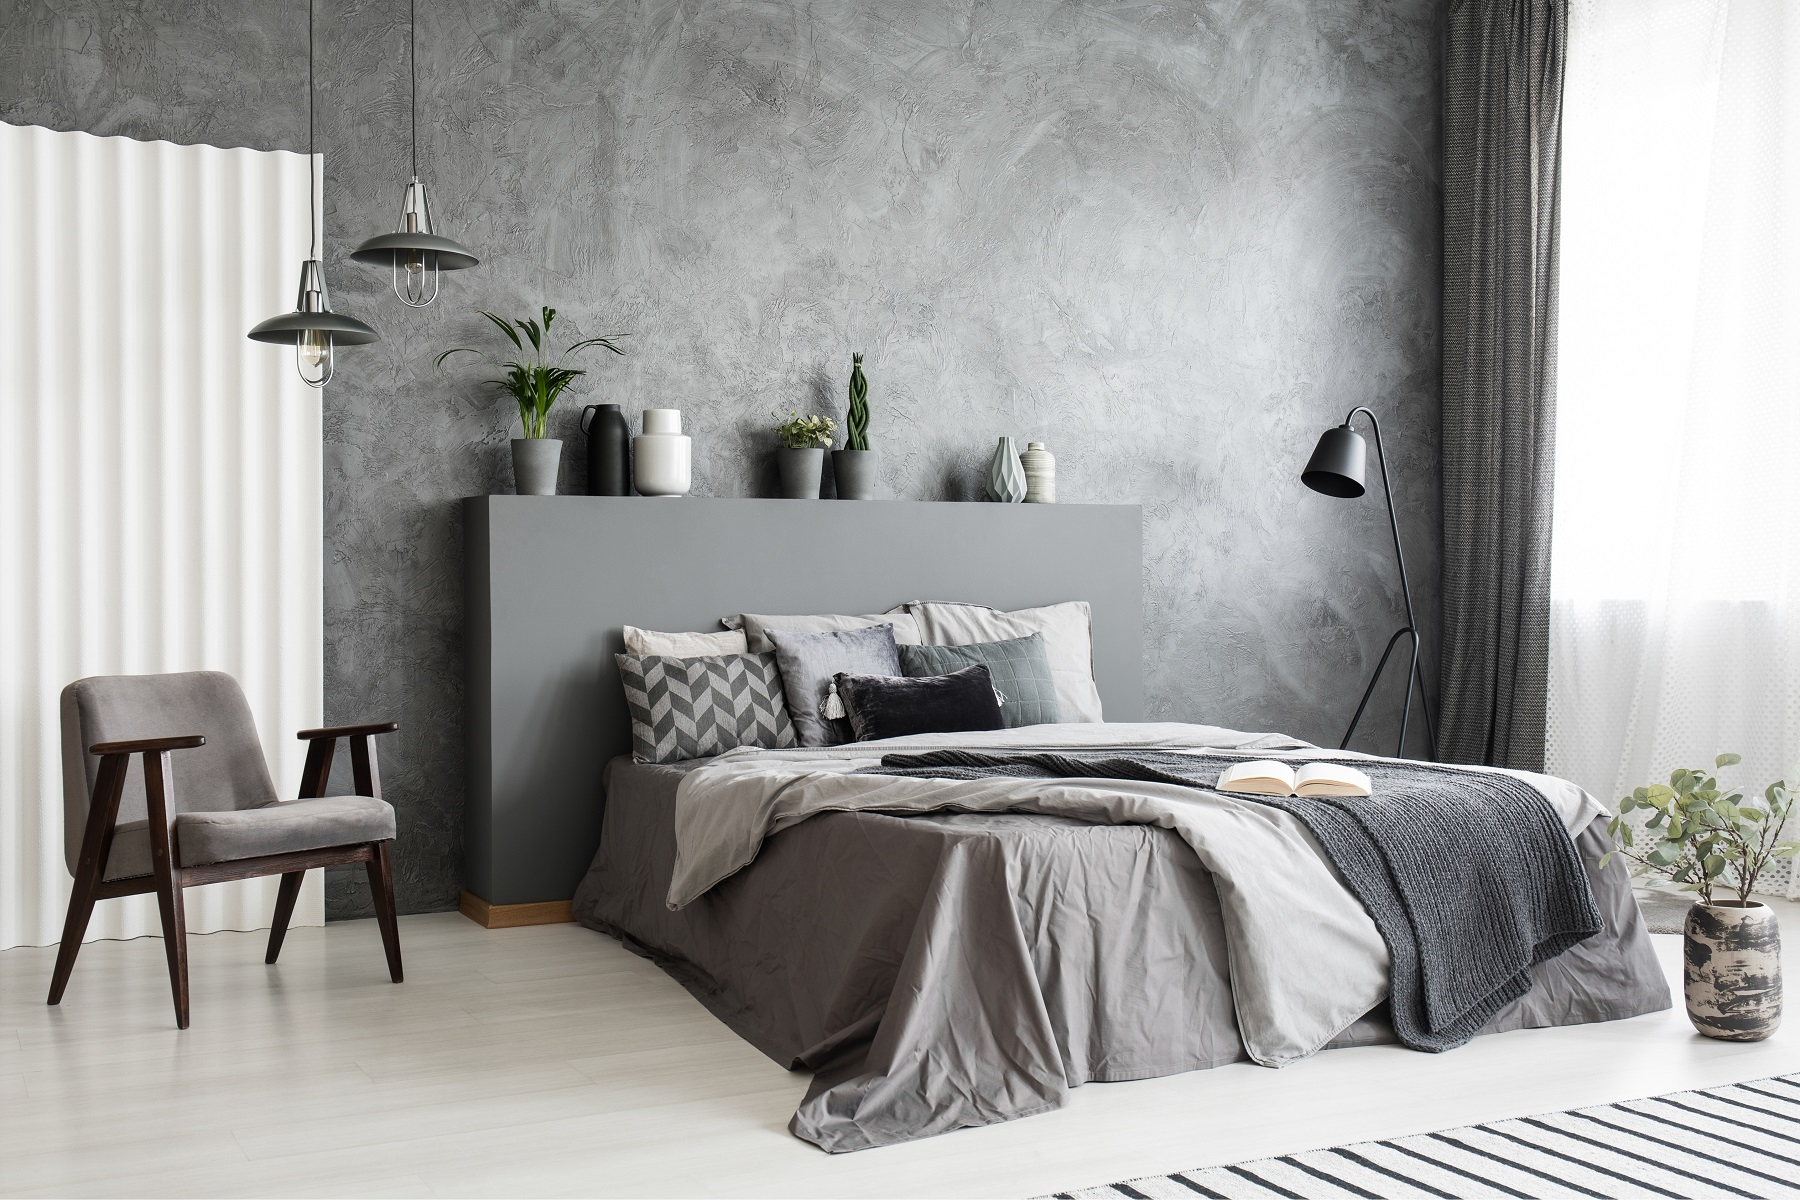 19 Blissful Bedroom Color Scheme Ideas The Luxpad regarding sizing 1800 X 1200